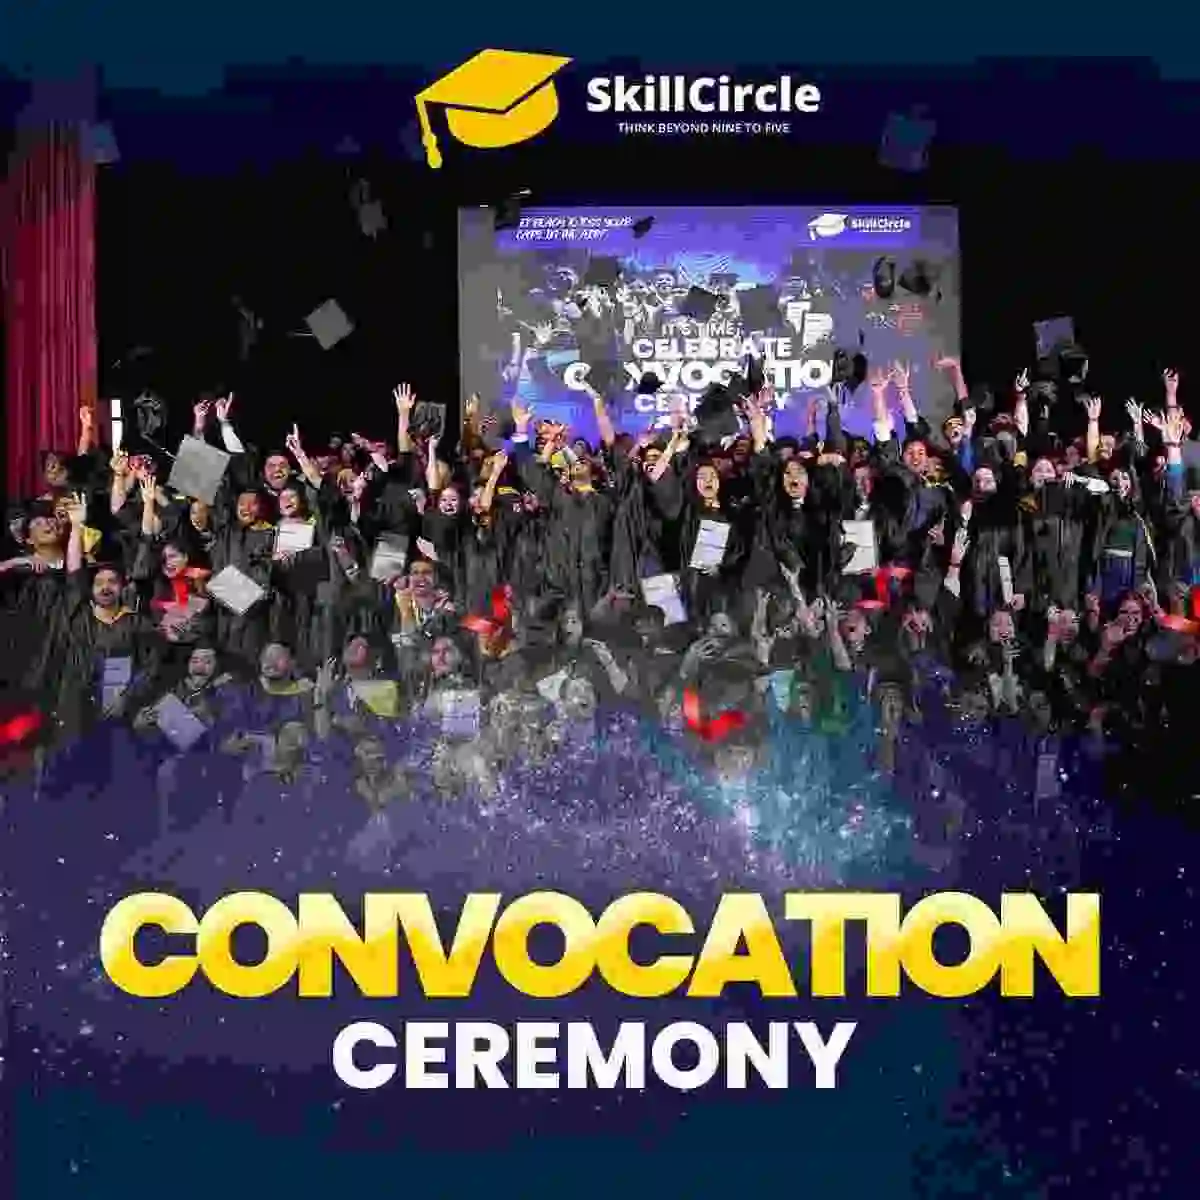 skillcircle convocation event